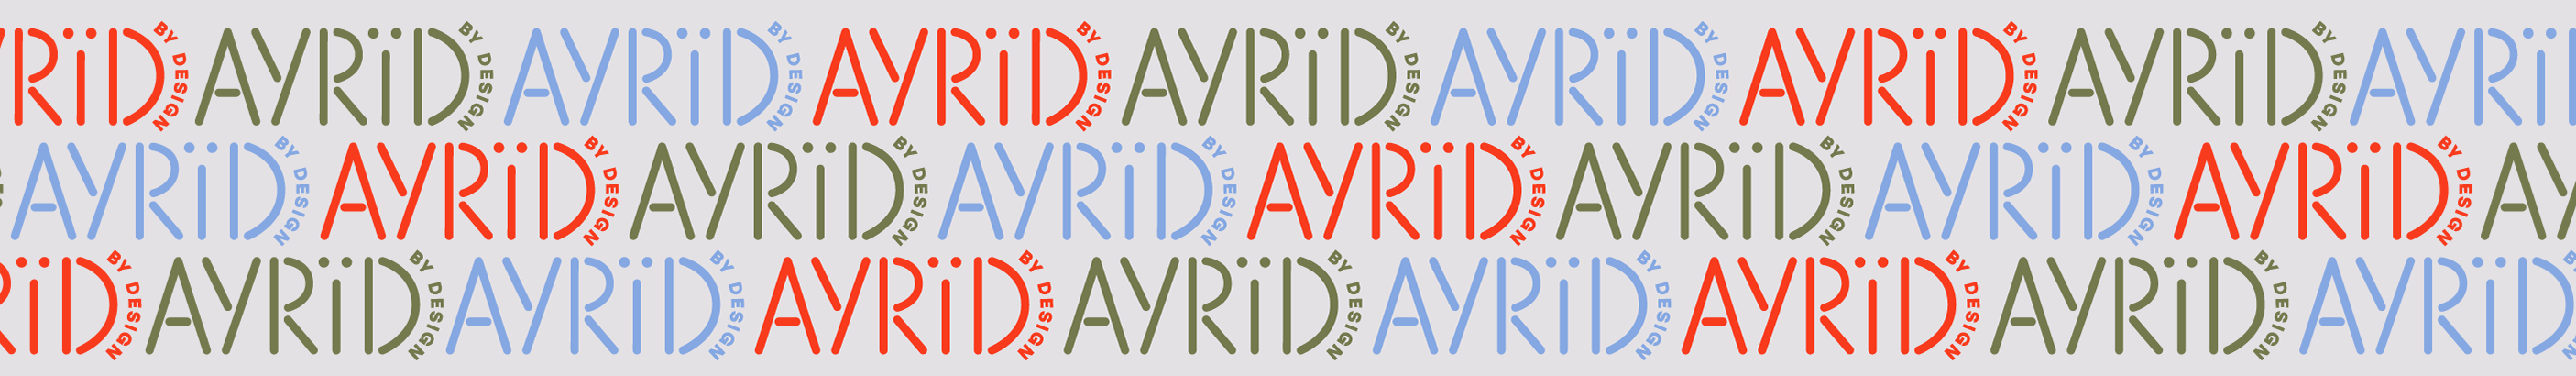 Ayrïd Chandler's profile banner